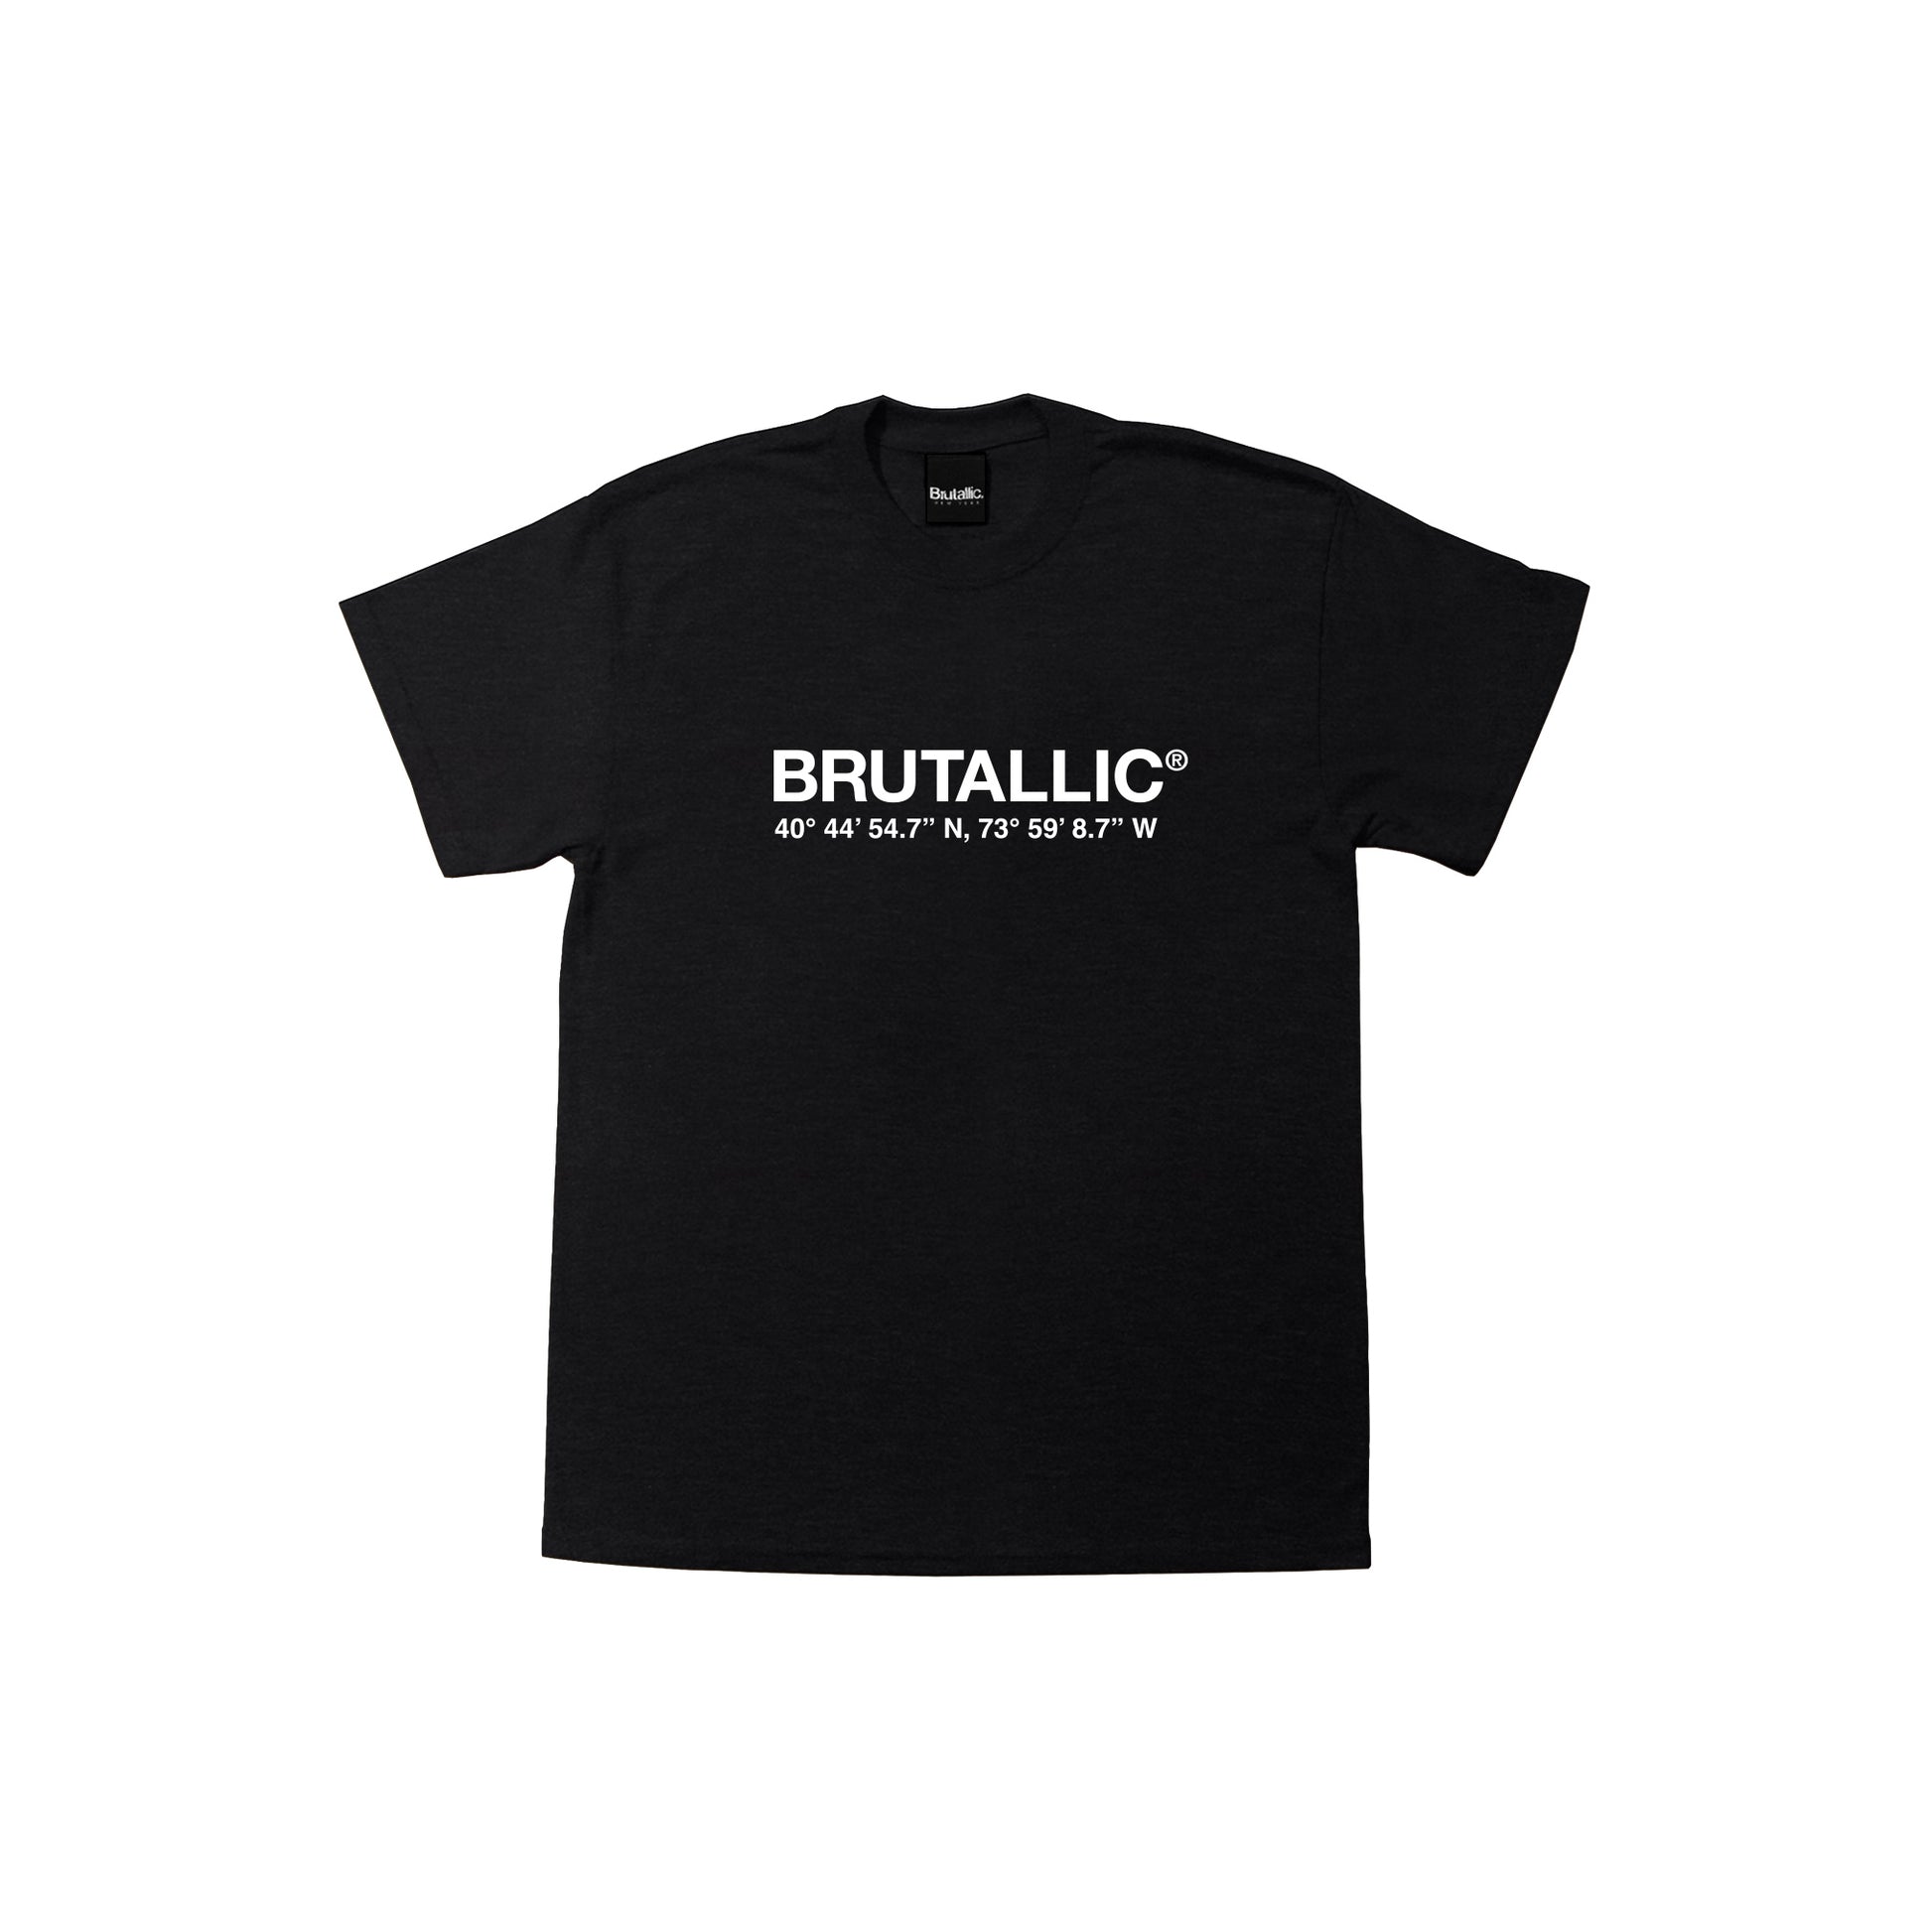 Coordinates NYC New York Brutallic logo on black tshirt